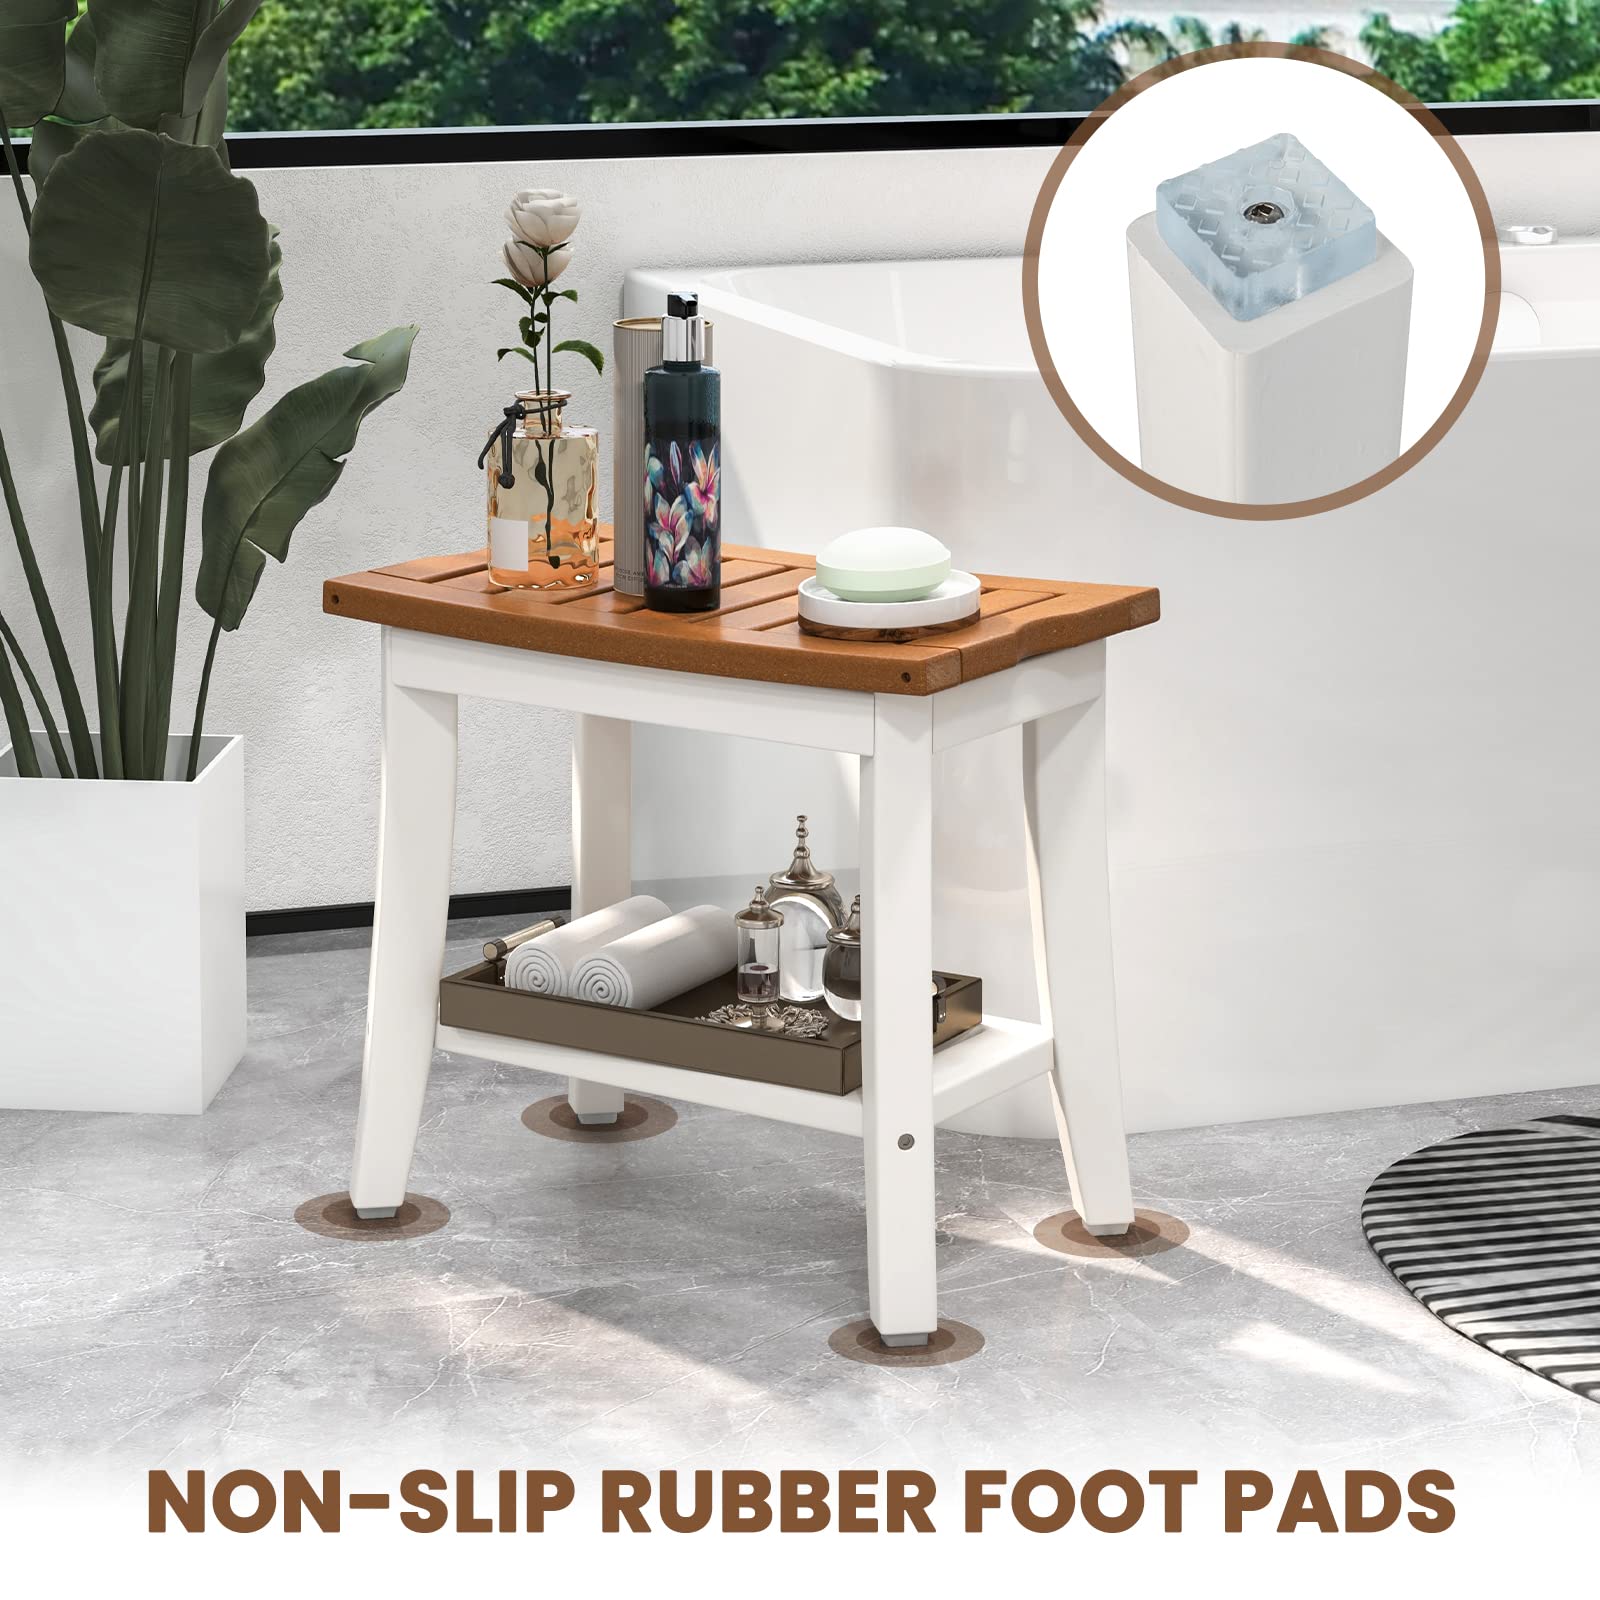 Giantex Shower Bench HDPE Waterproof - Bath Spa Seat with Storage Shelf, Non-Slip Rubber Foot Pads